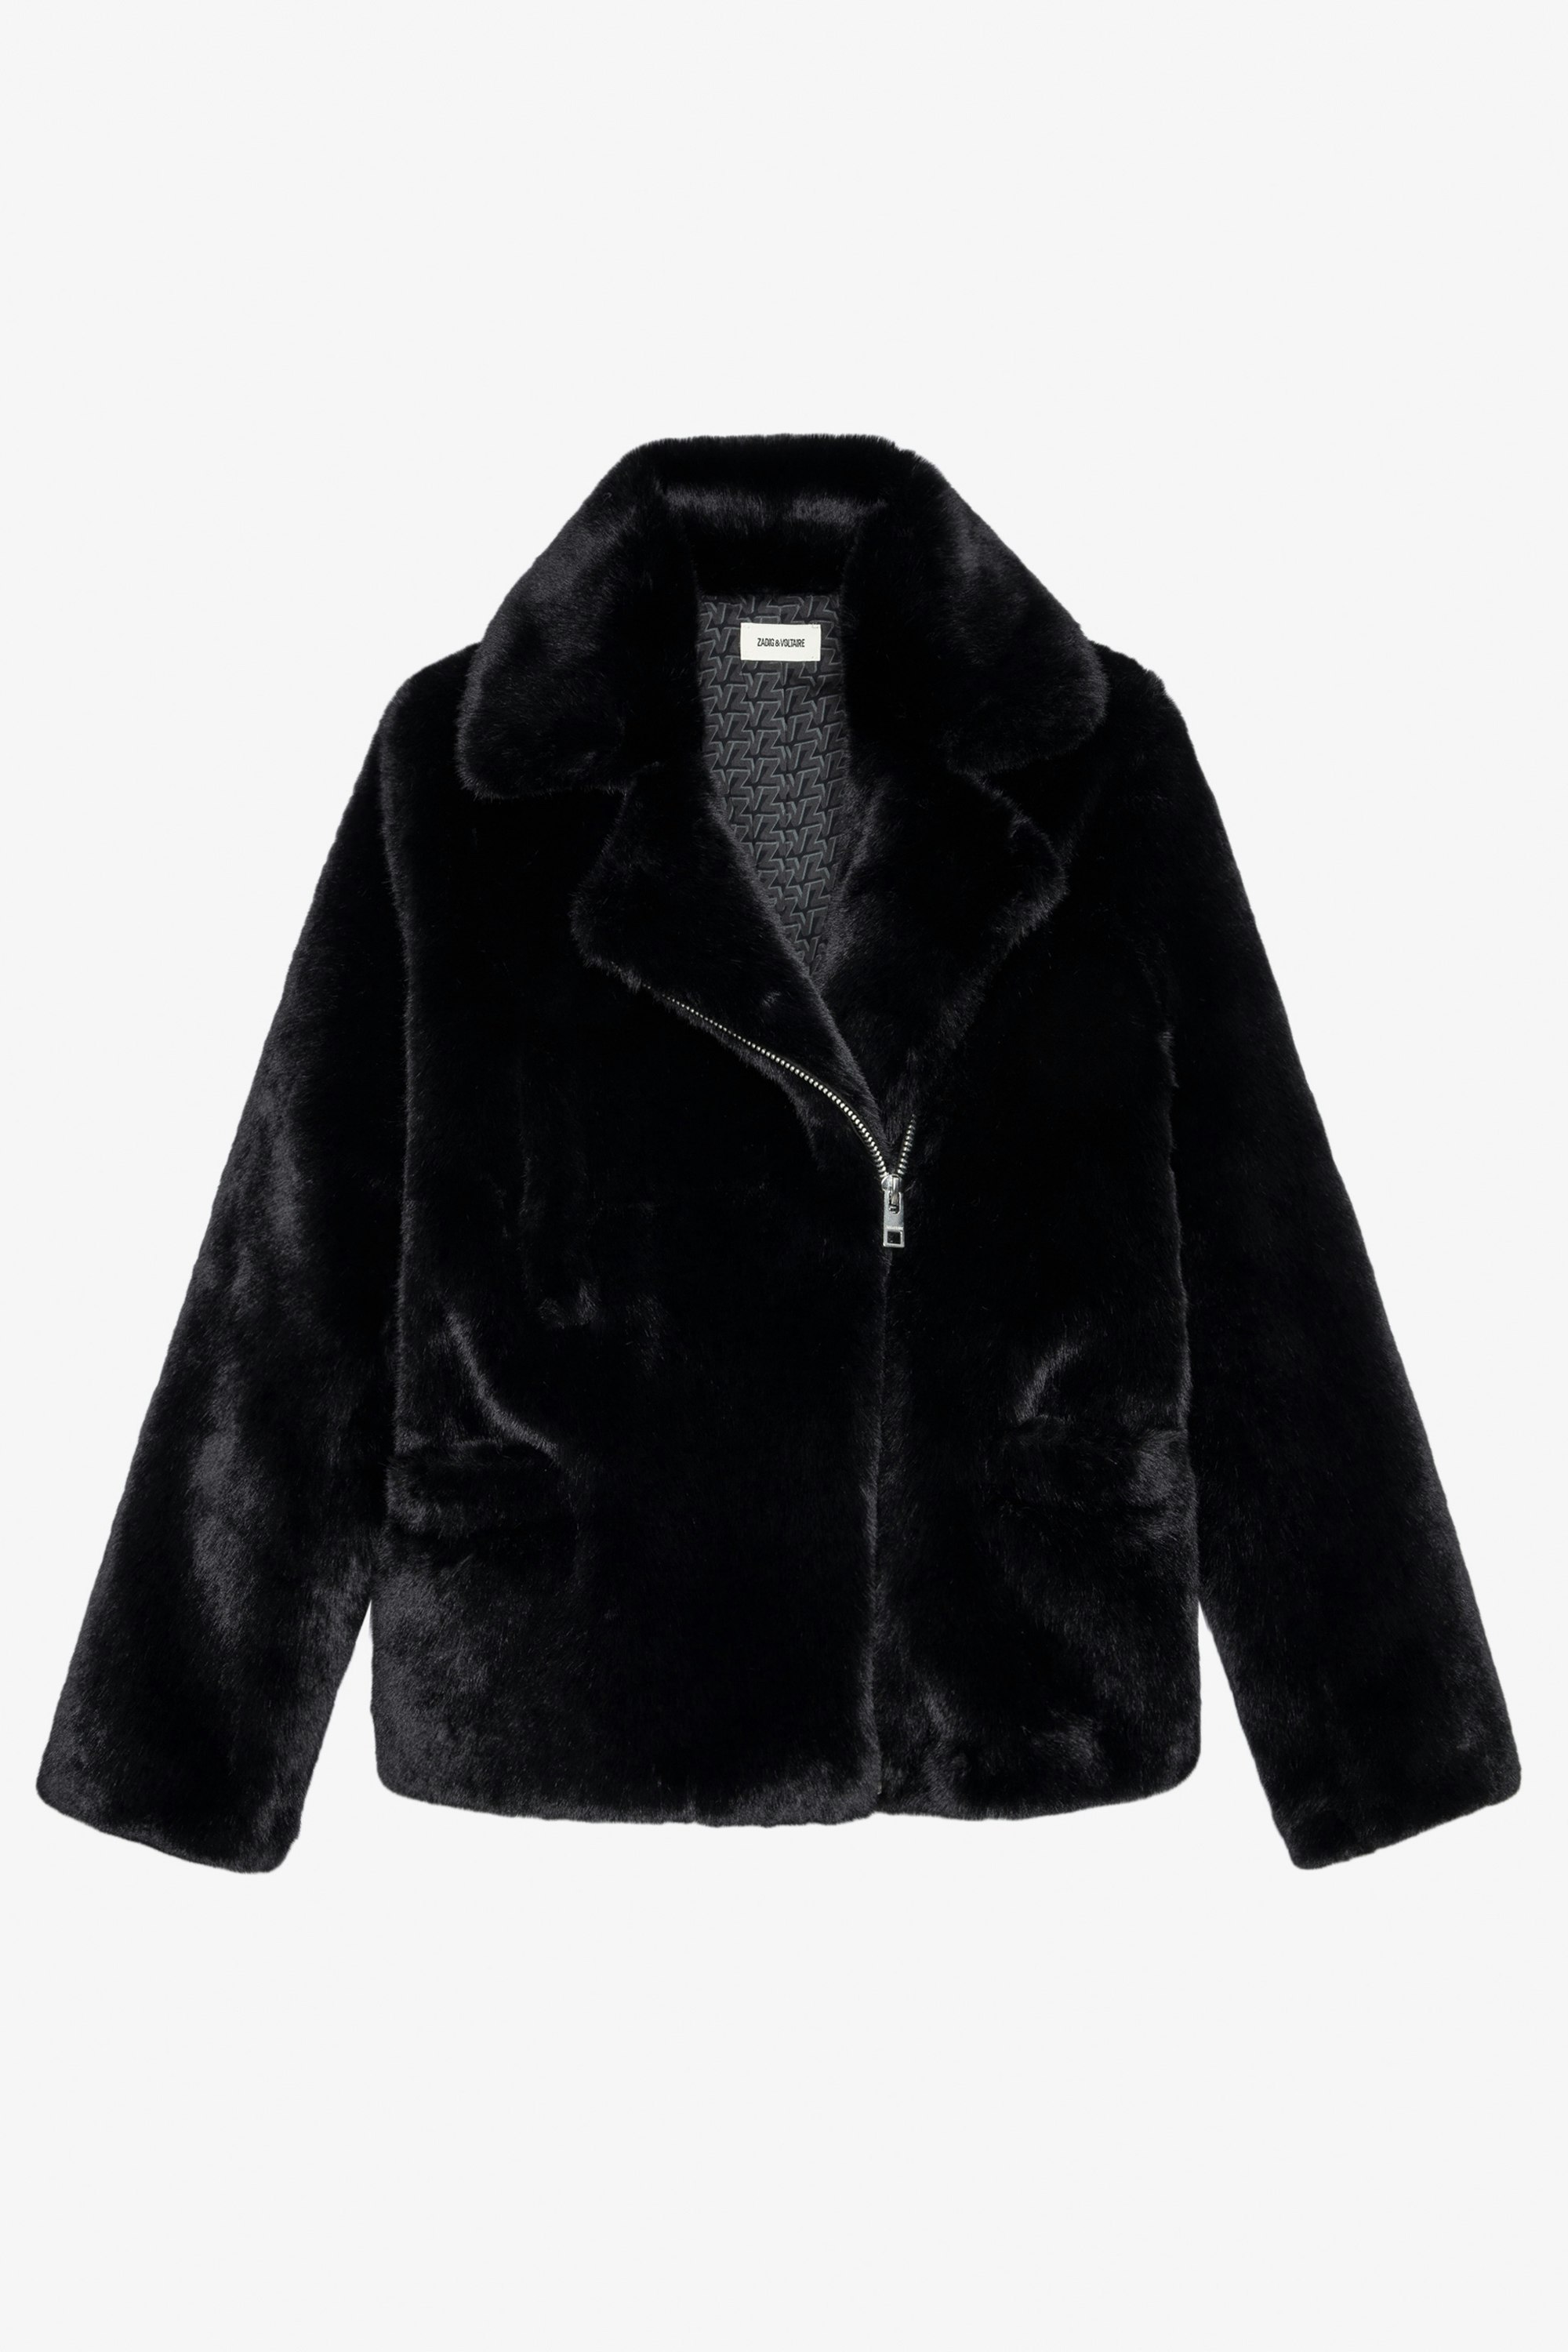 Freeze Coat - Women’s short black faux fur coat.